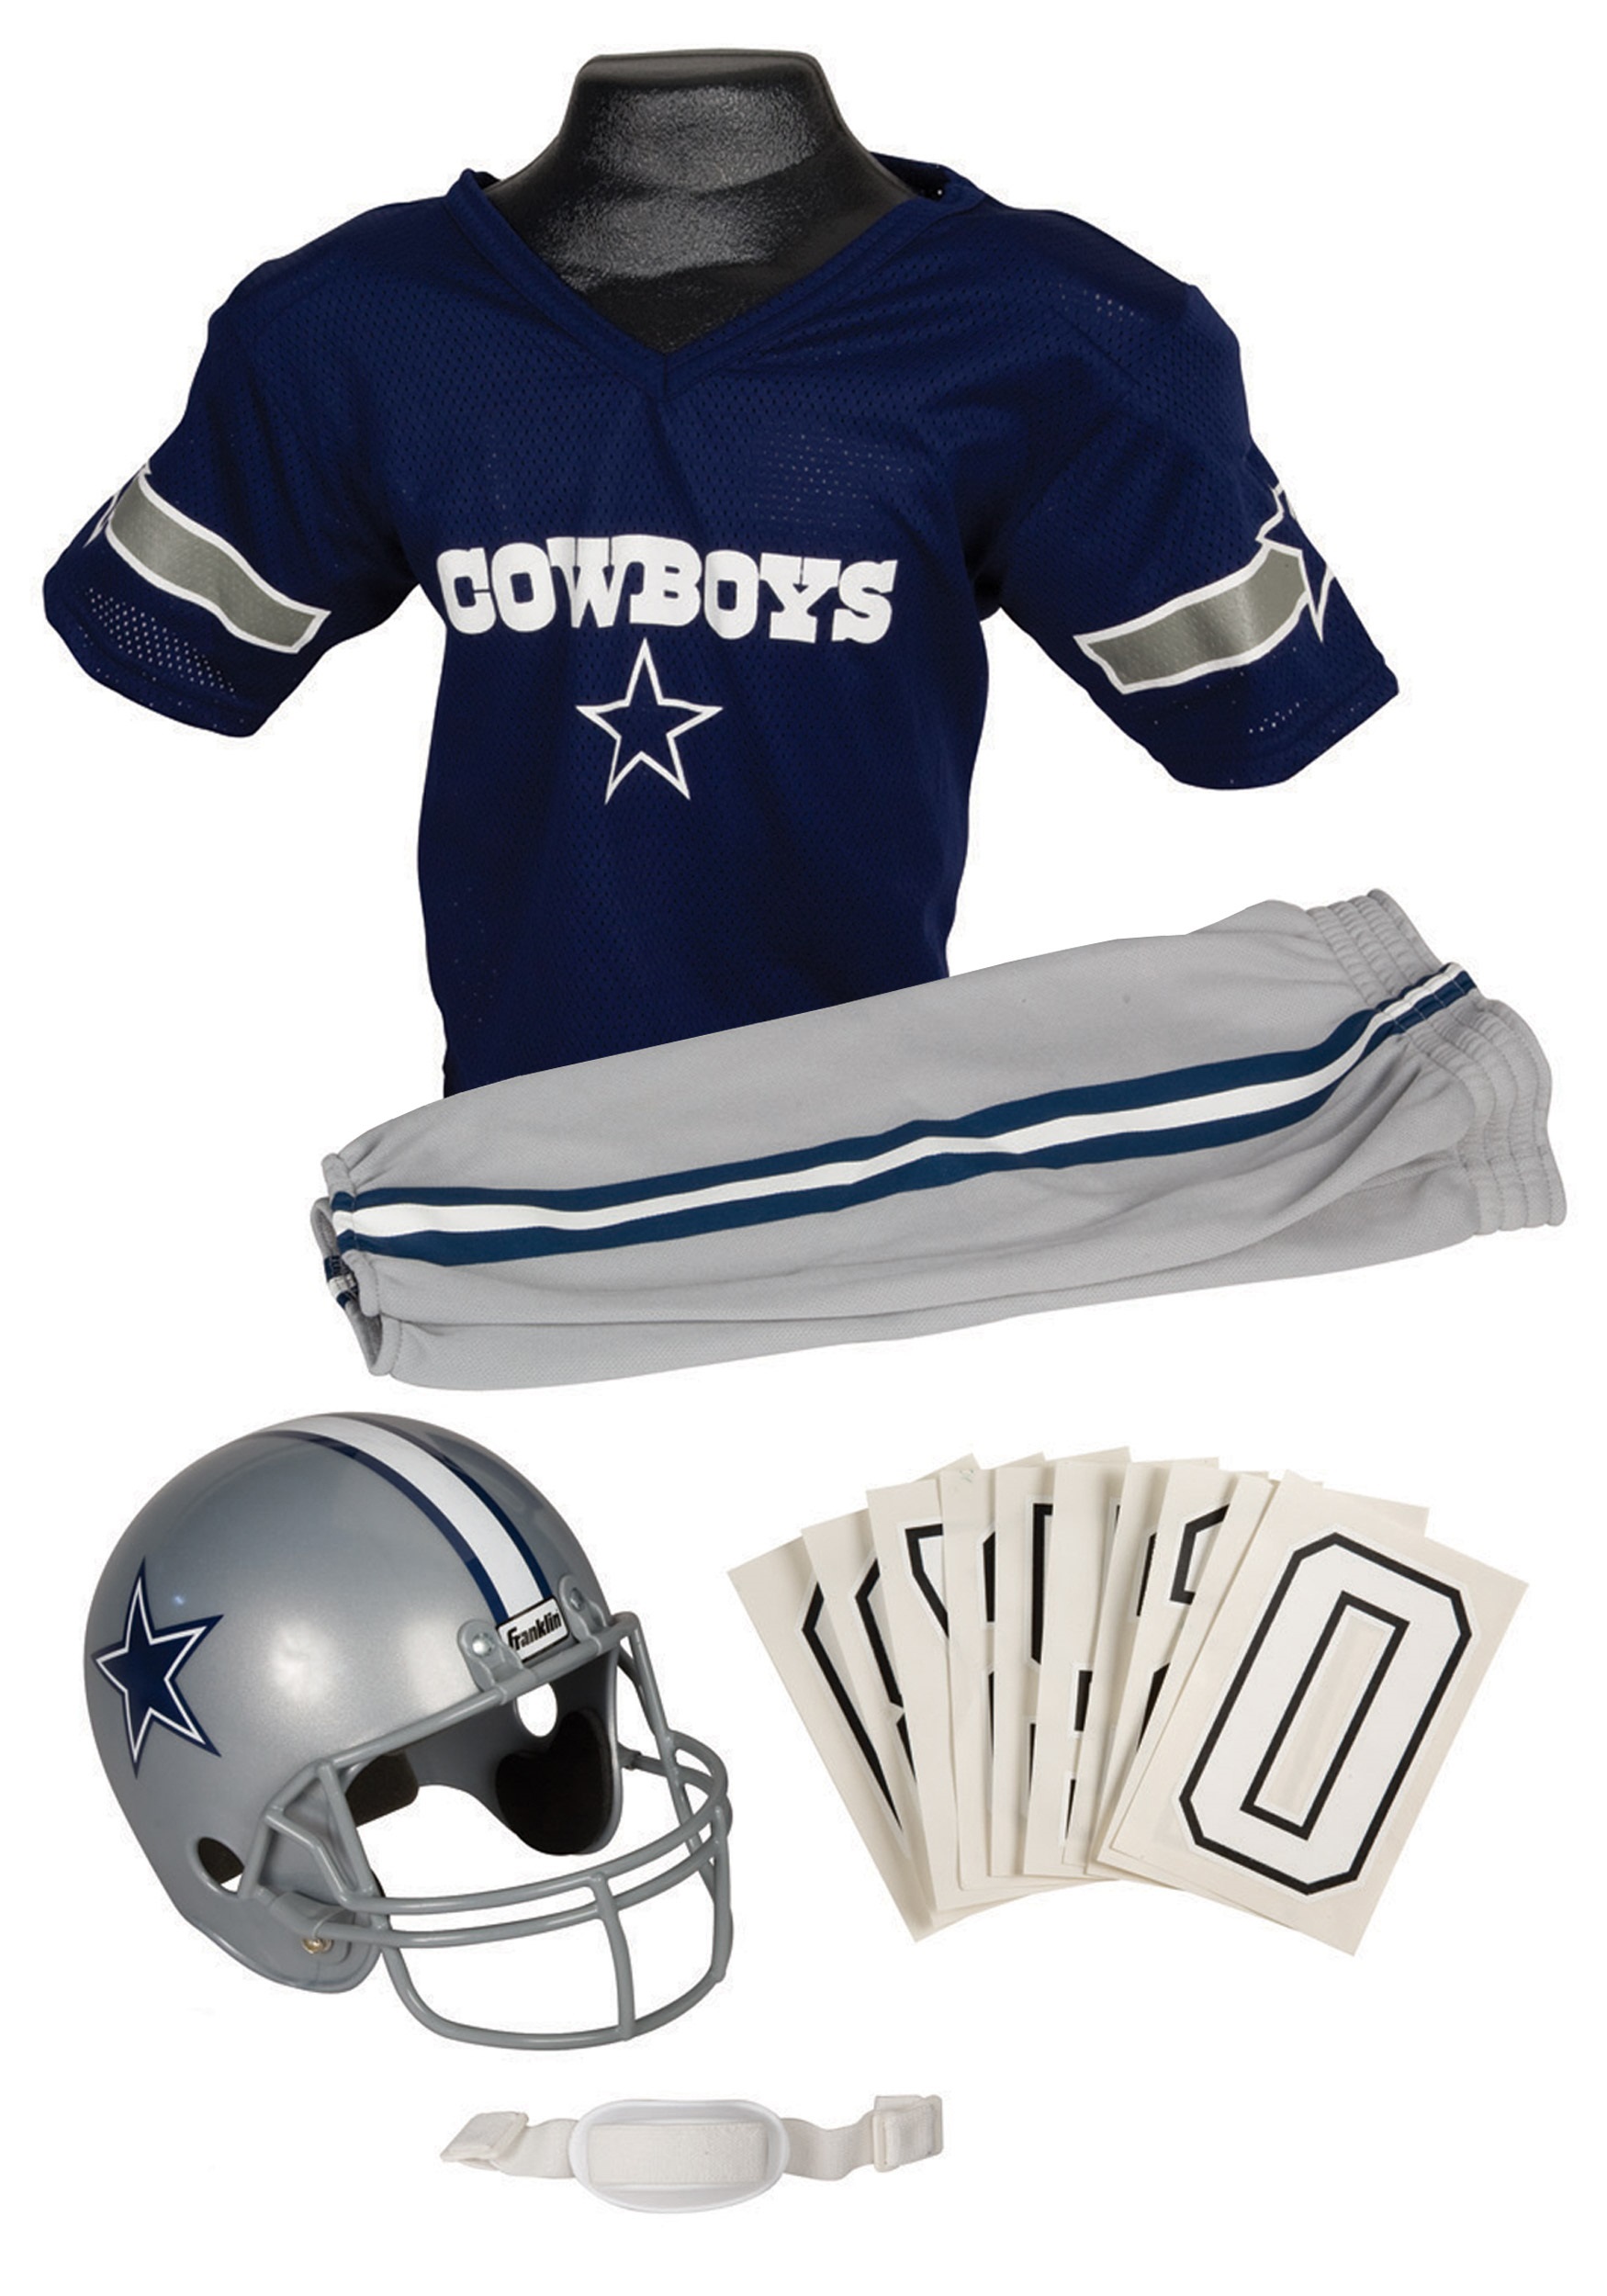 Kid’s NFL Cowboys Uniform Costume